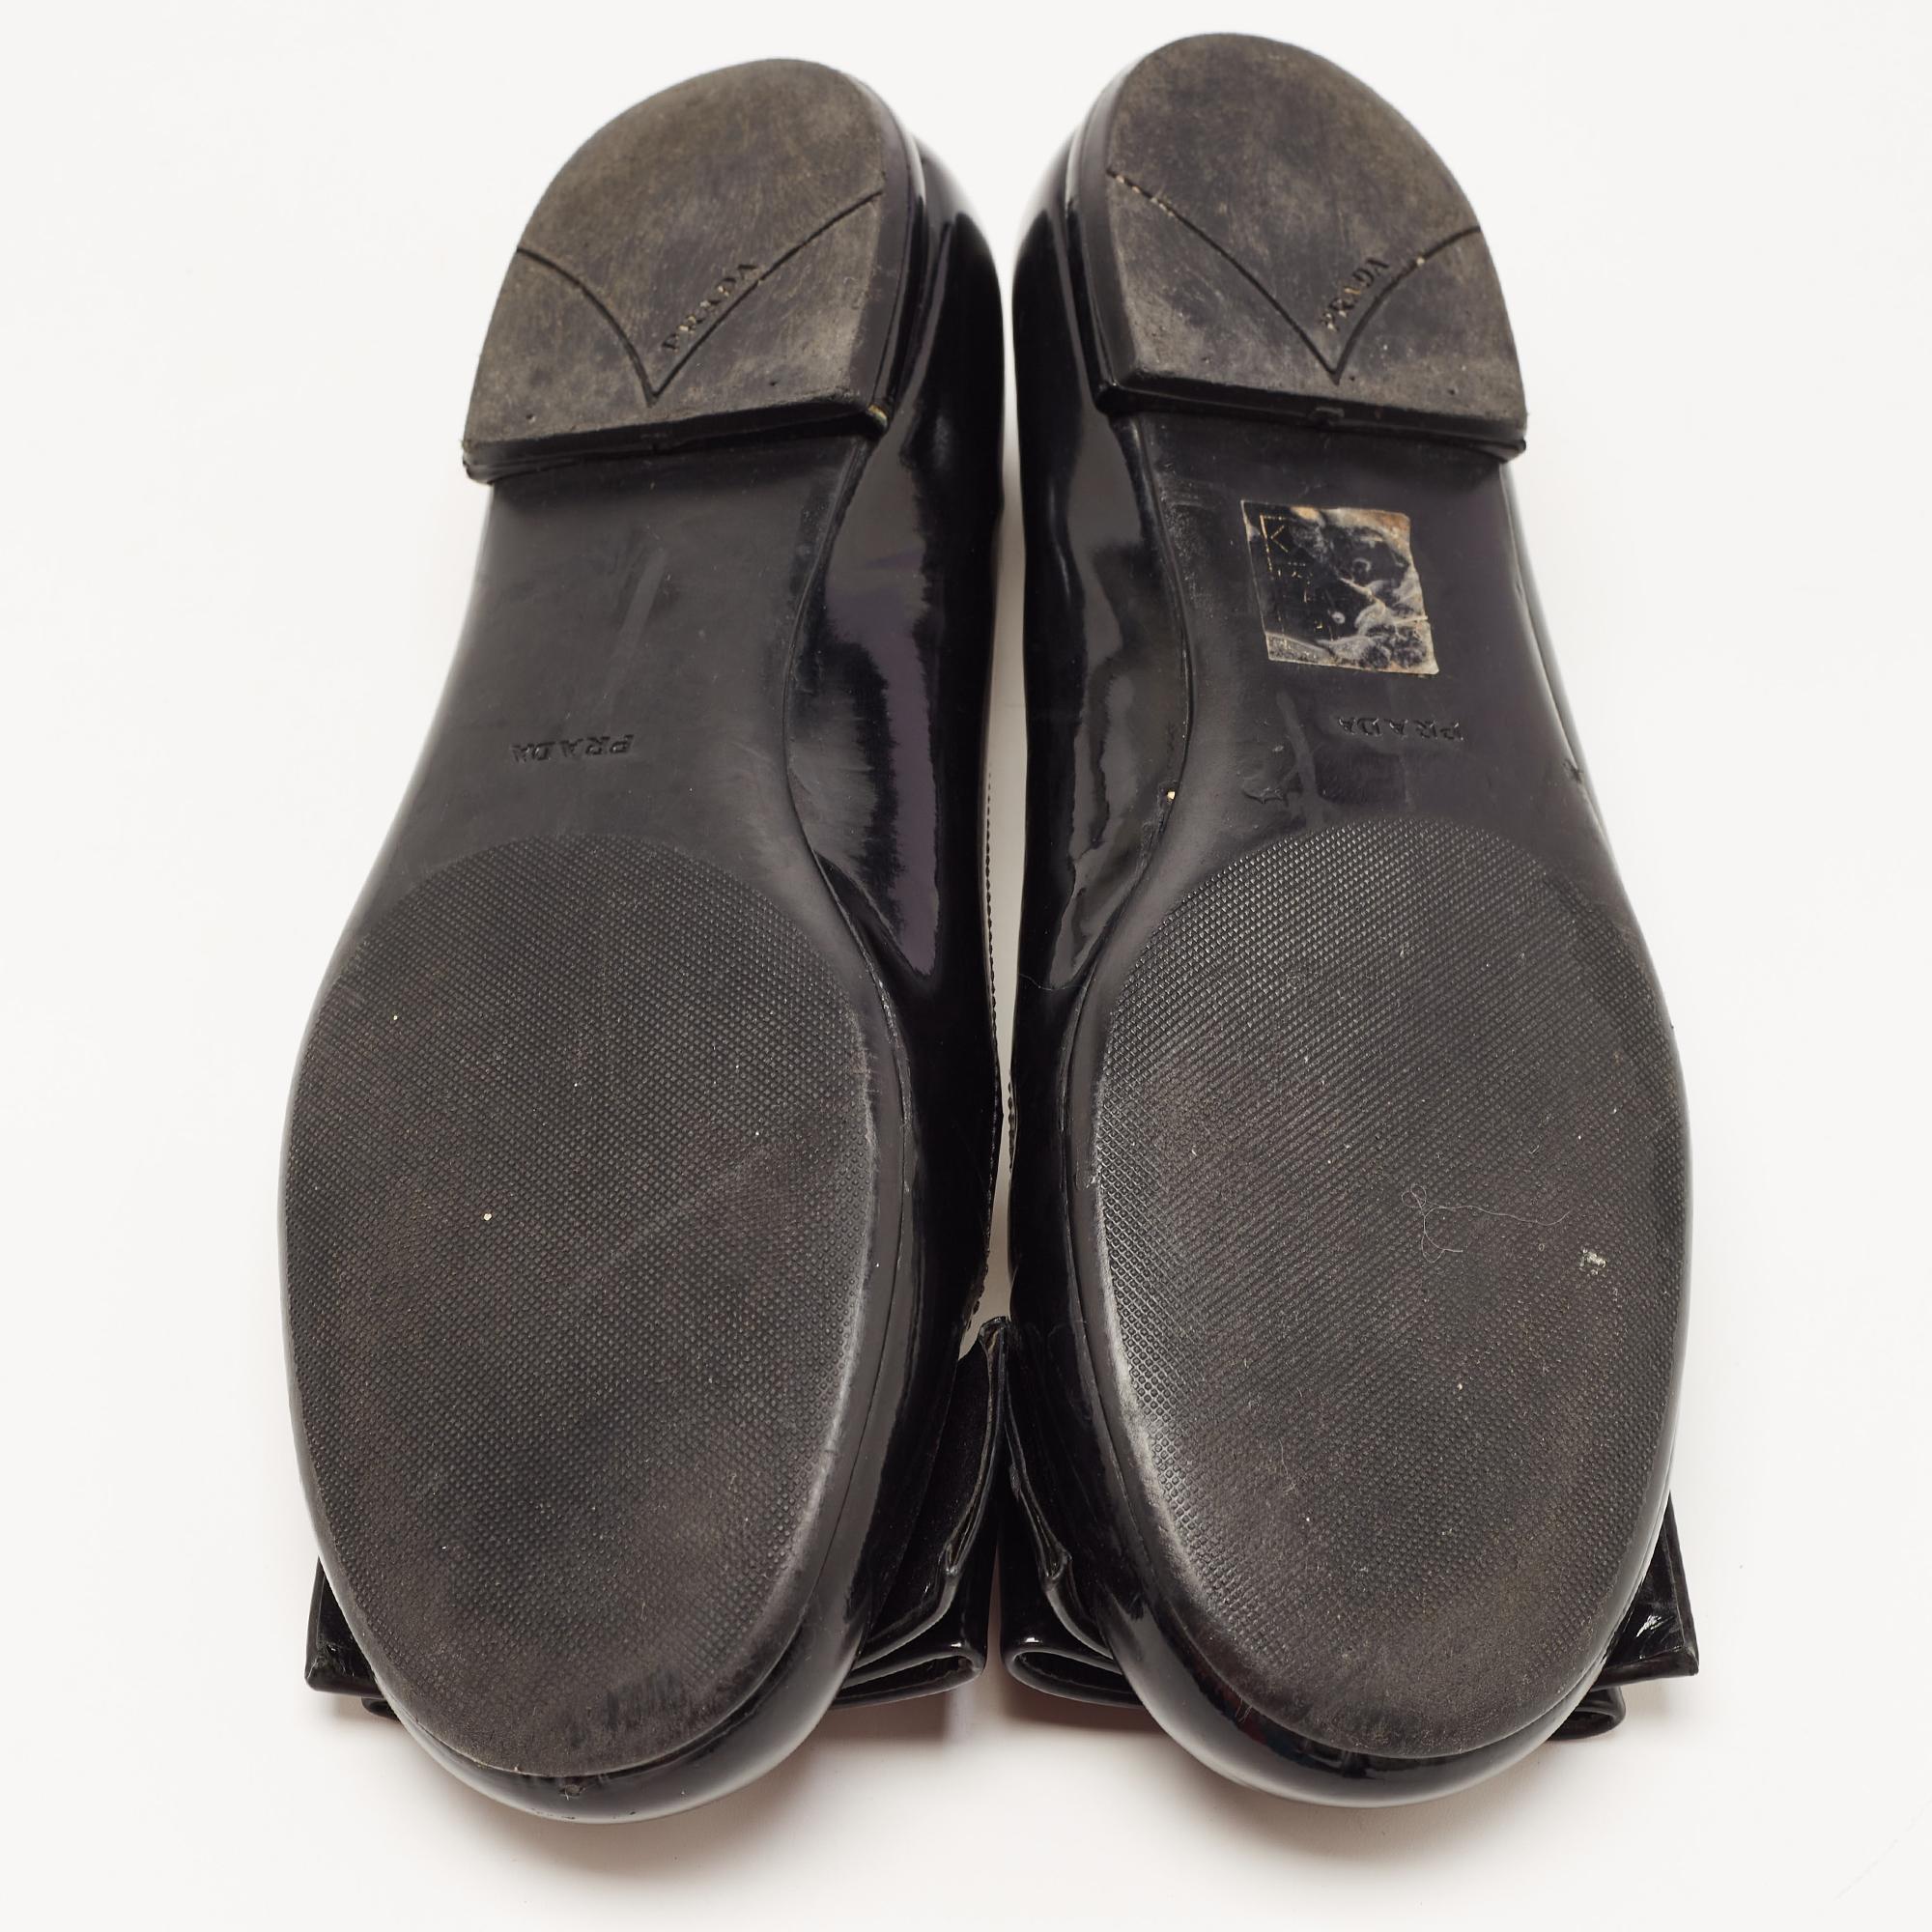 Prada Black Patent Leather Bow Ballet Flats Size 35 4